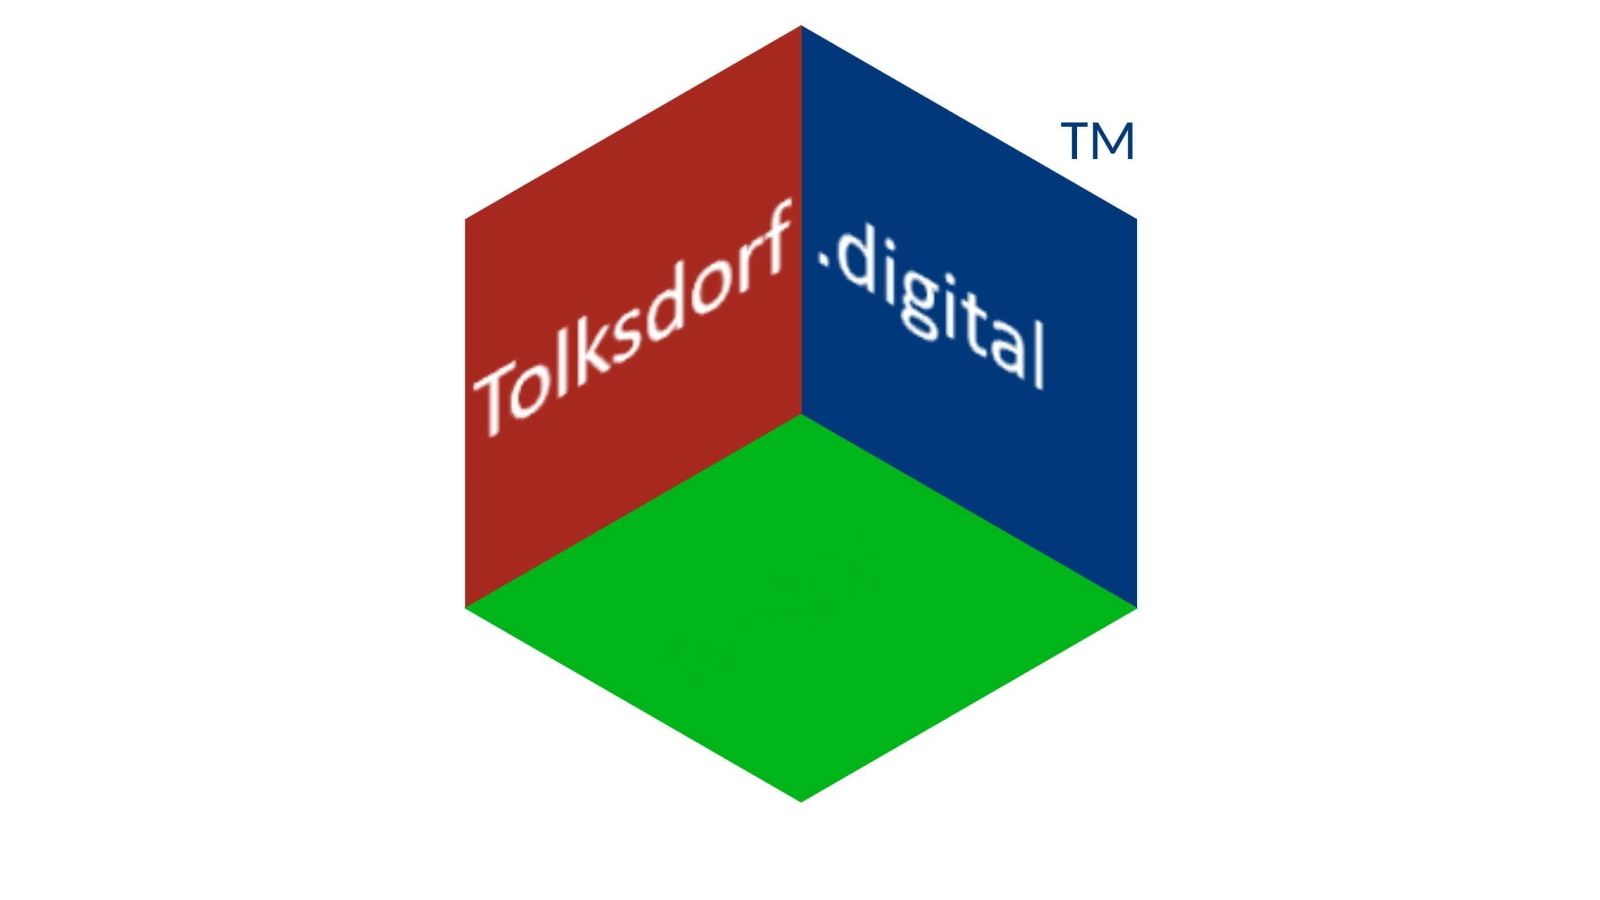 Tolksdorf.digital GmbH_1600